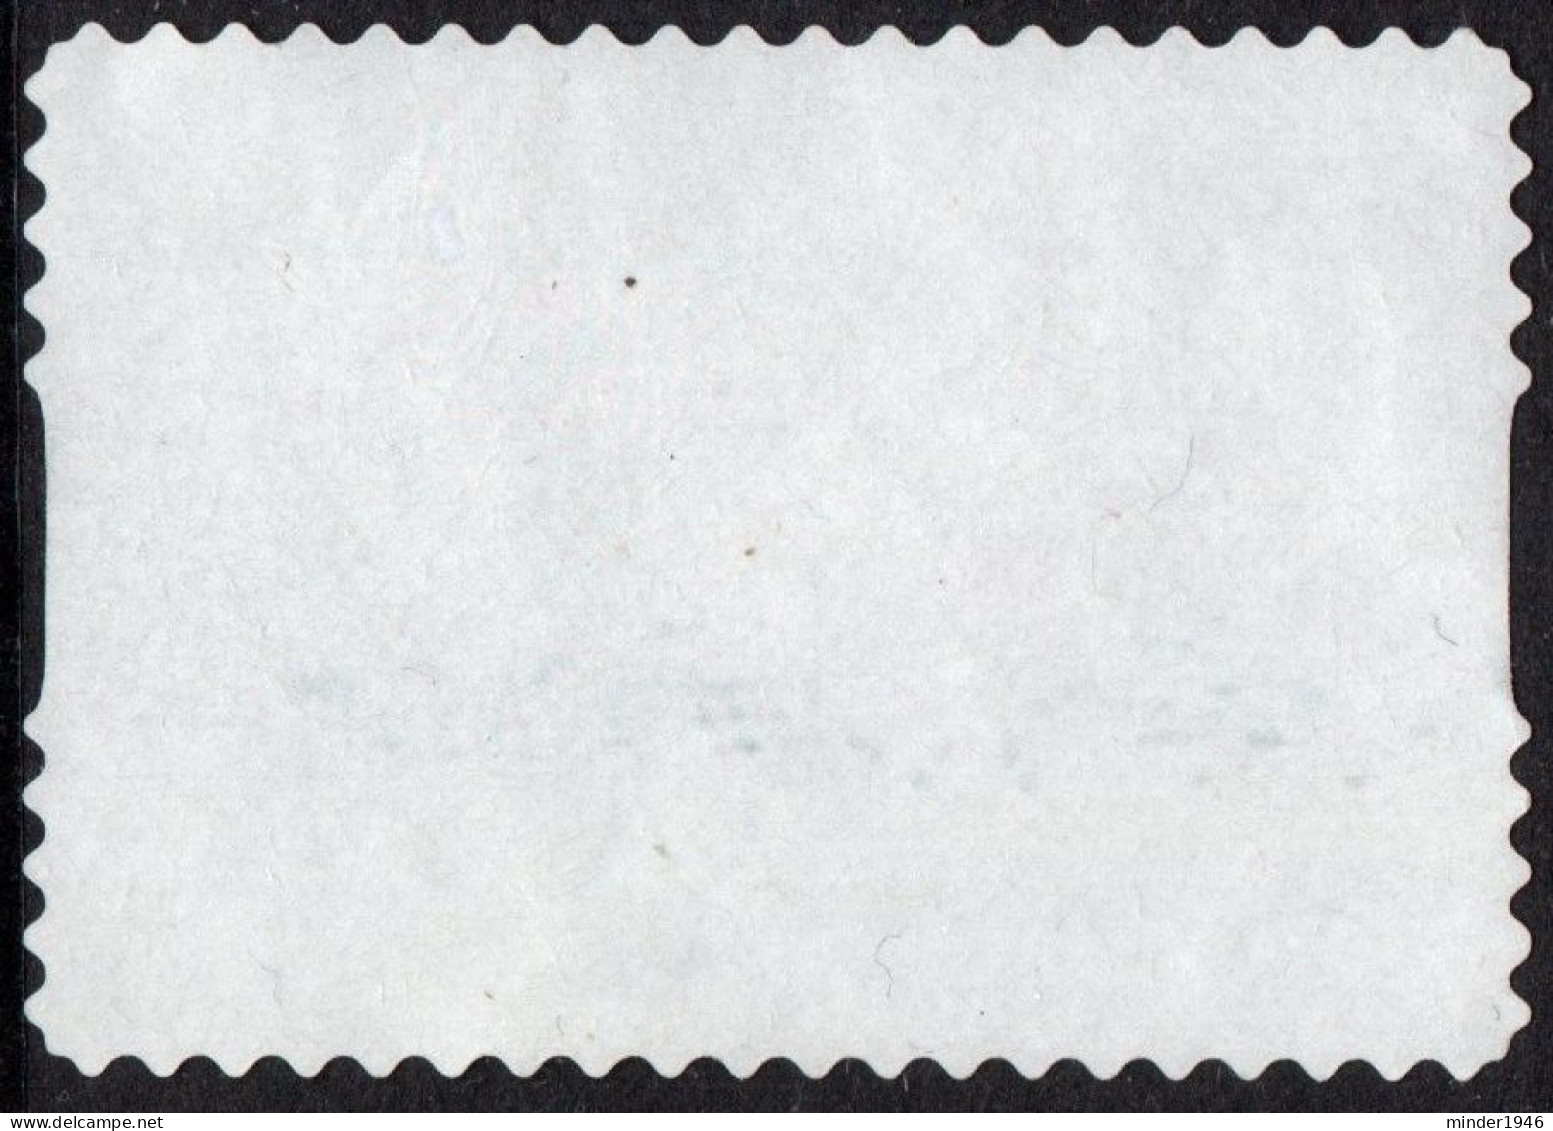 AUSTRALIA 2014 QEII 70c Multicoloured, Australian Racecourses - Flemington VIC Self Adhesive Stamps FU - Usados